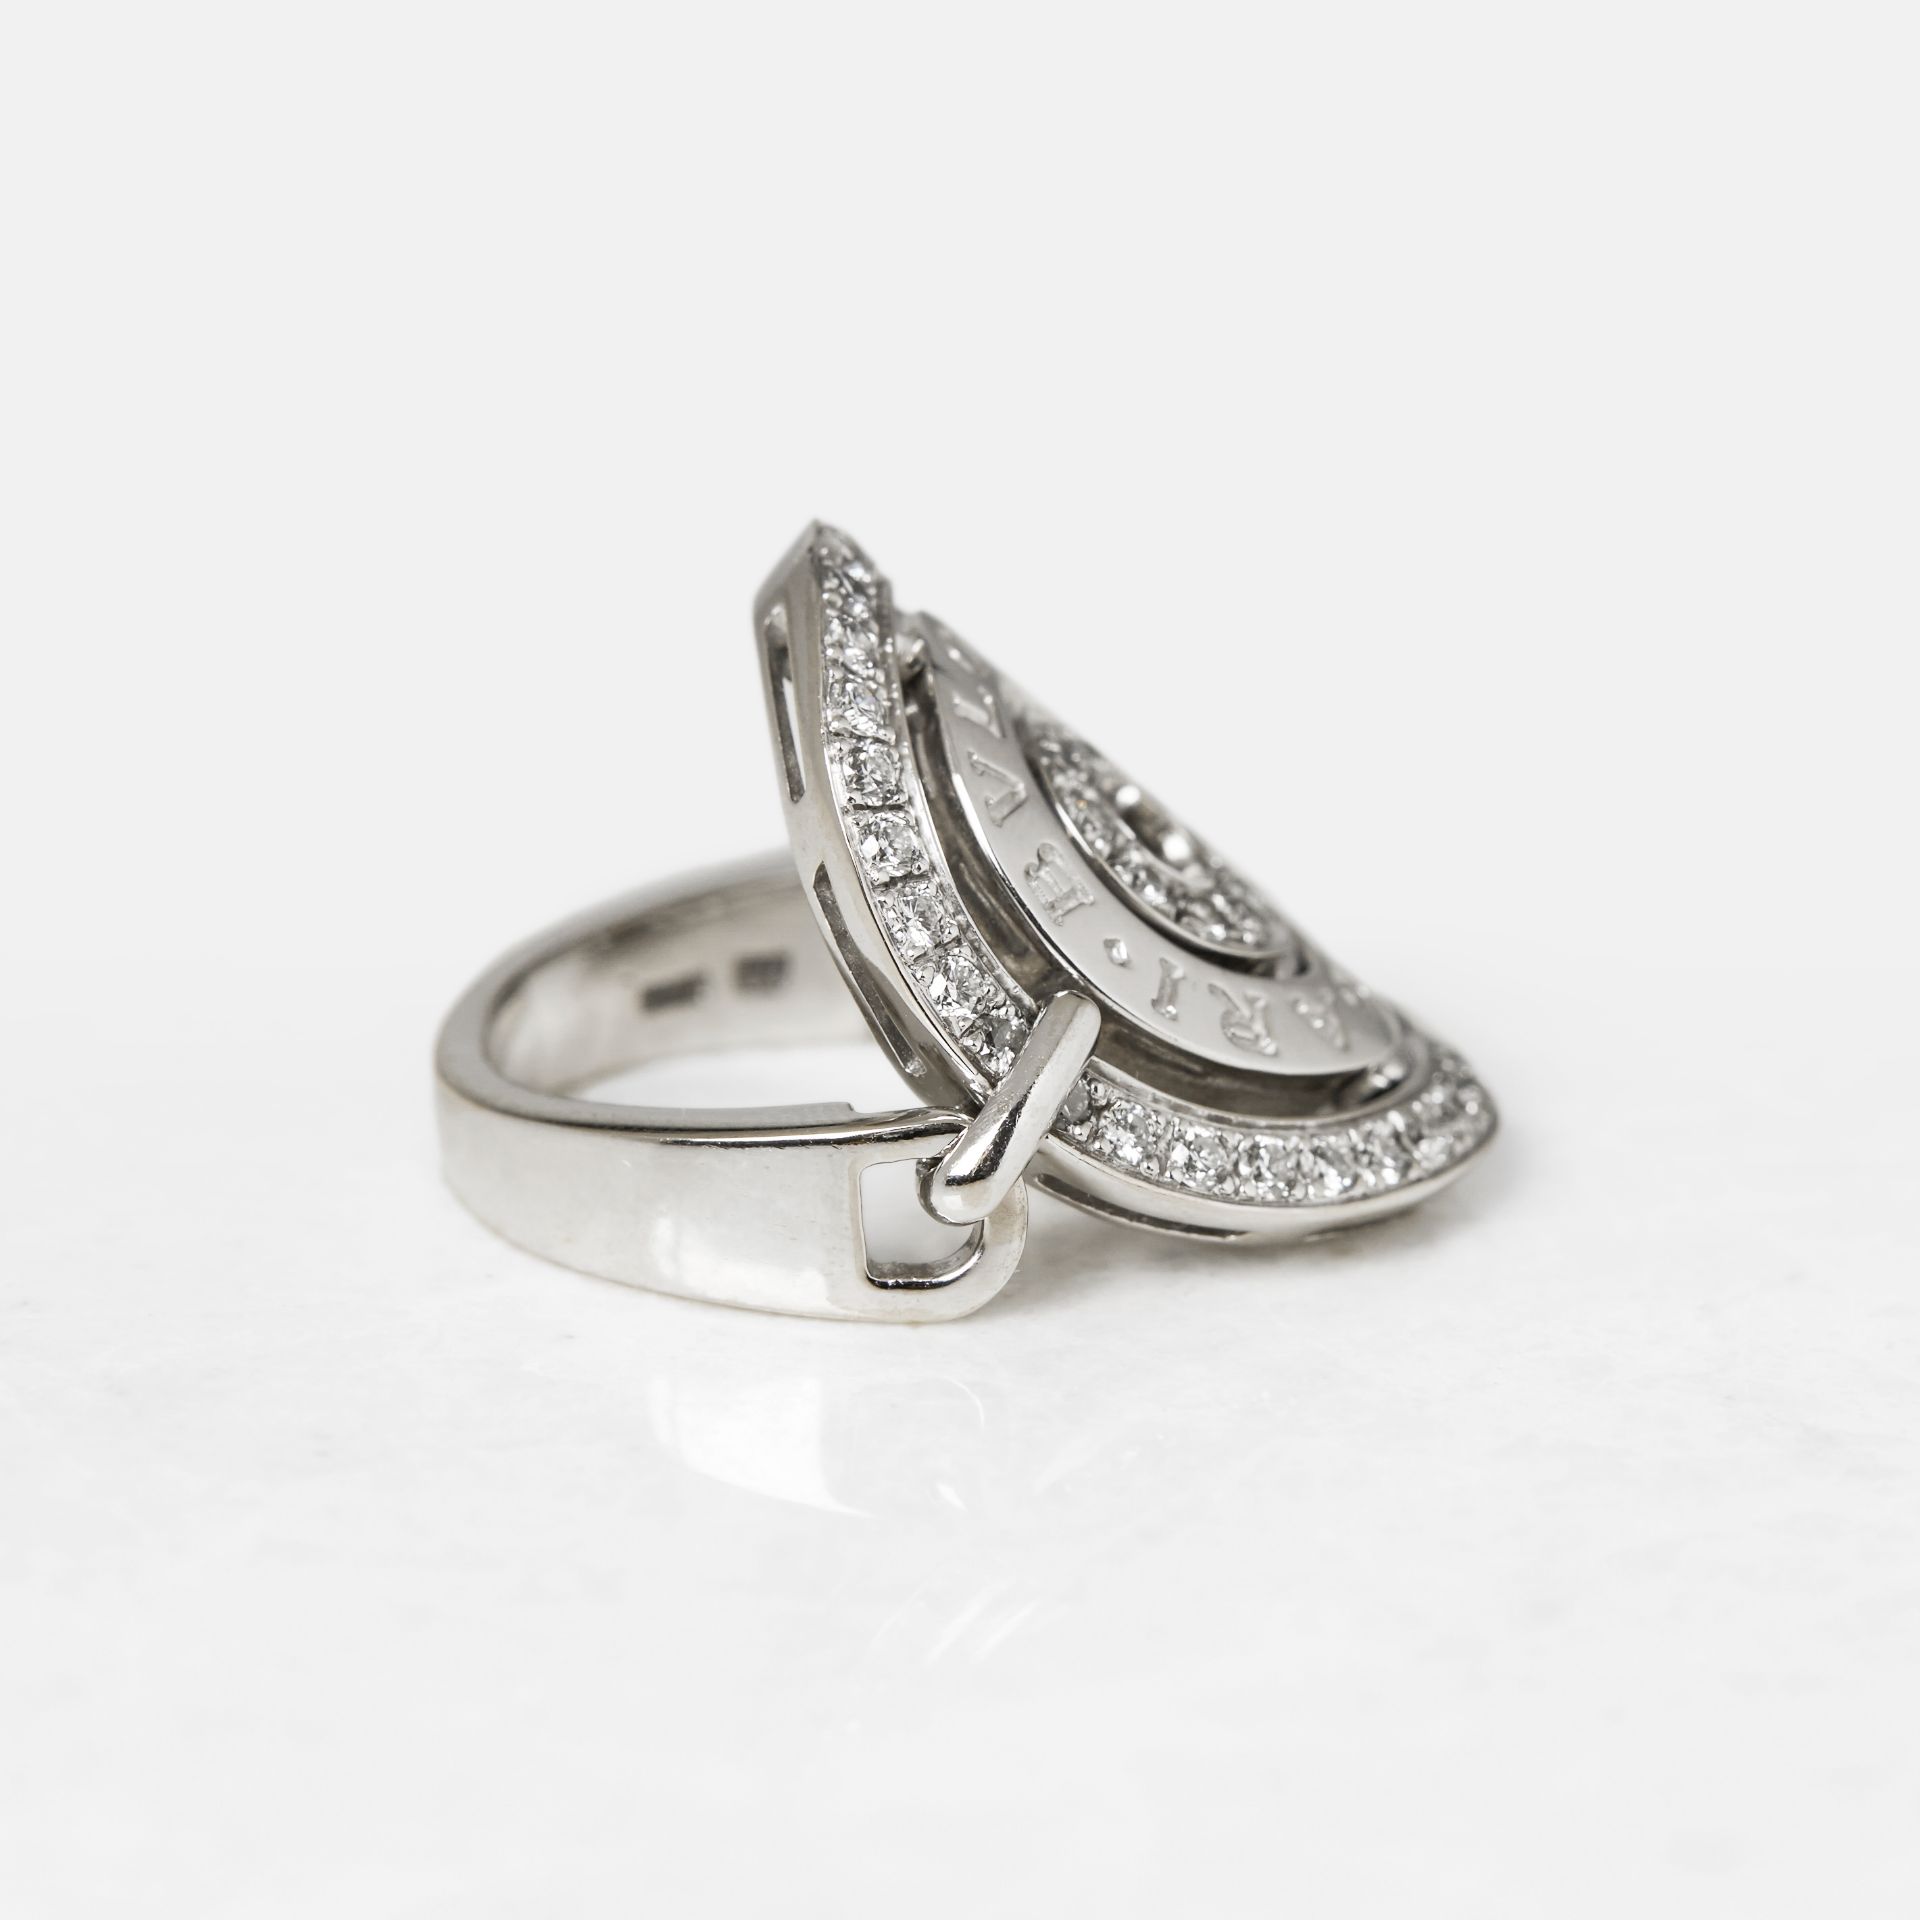 Bulgari 18k White Gold Diamond Cerchi Ring - Image 10 of 12